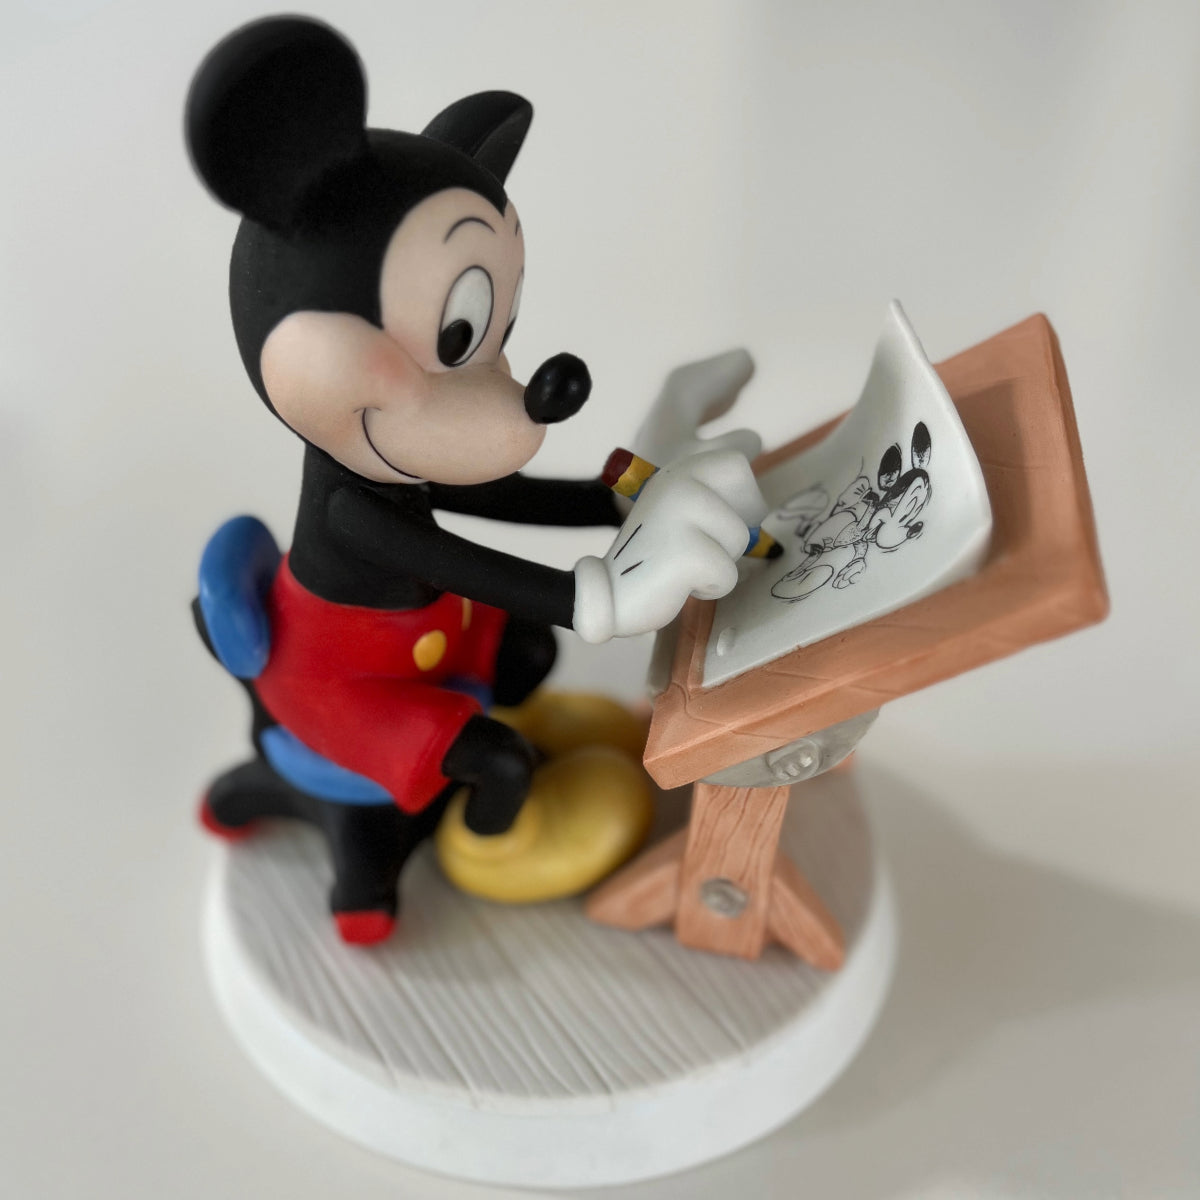 VTG Disney Mickey self Portrait Painting Porcelain Figurine